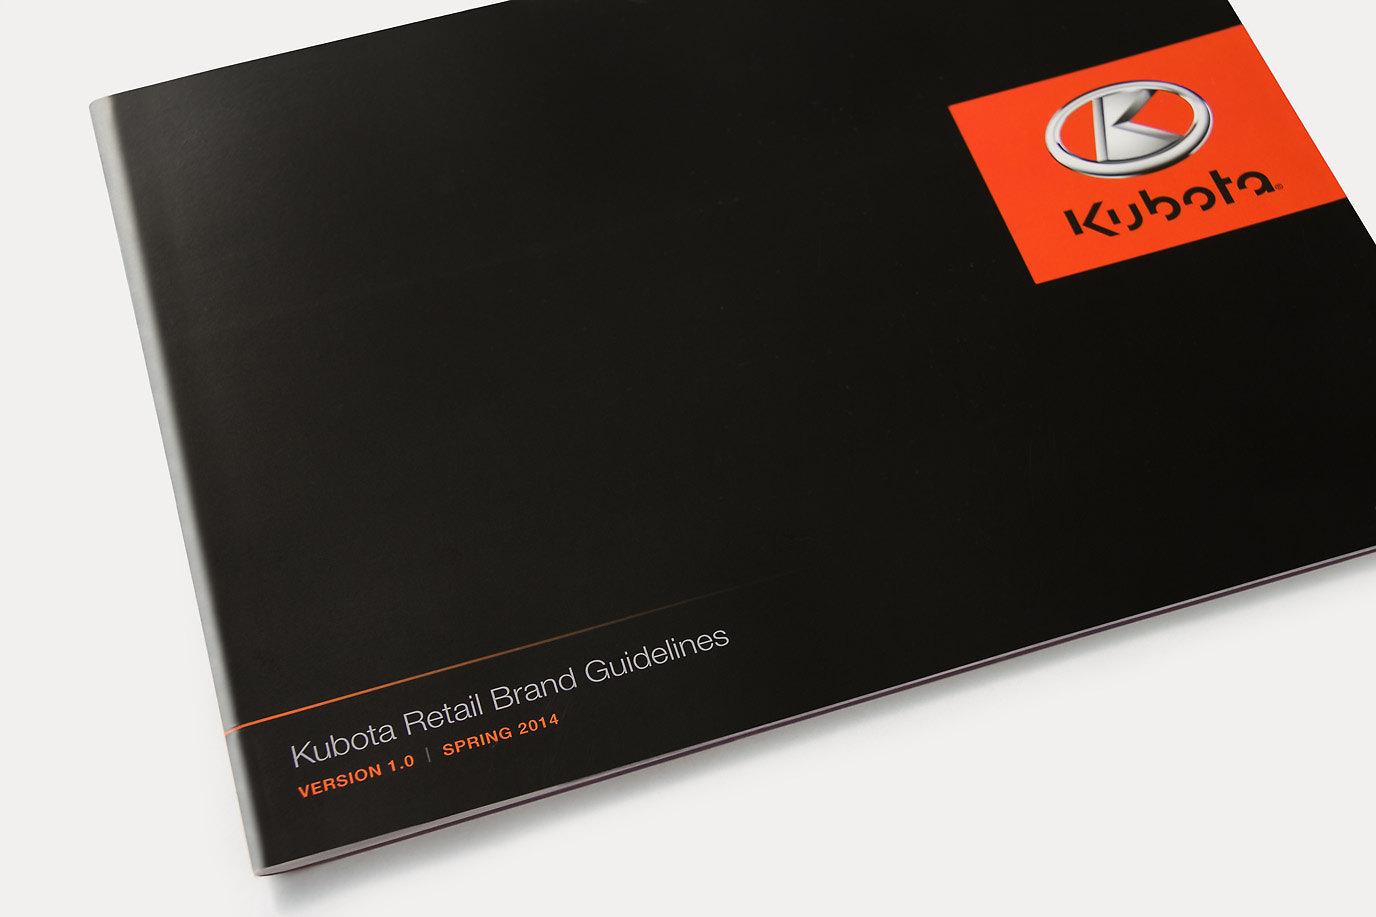 Kubota Retail Brand Guidelines cover